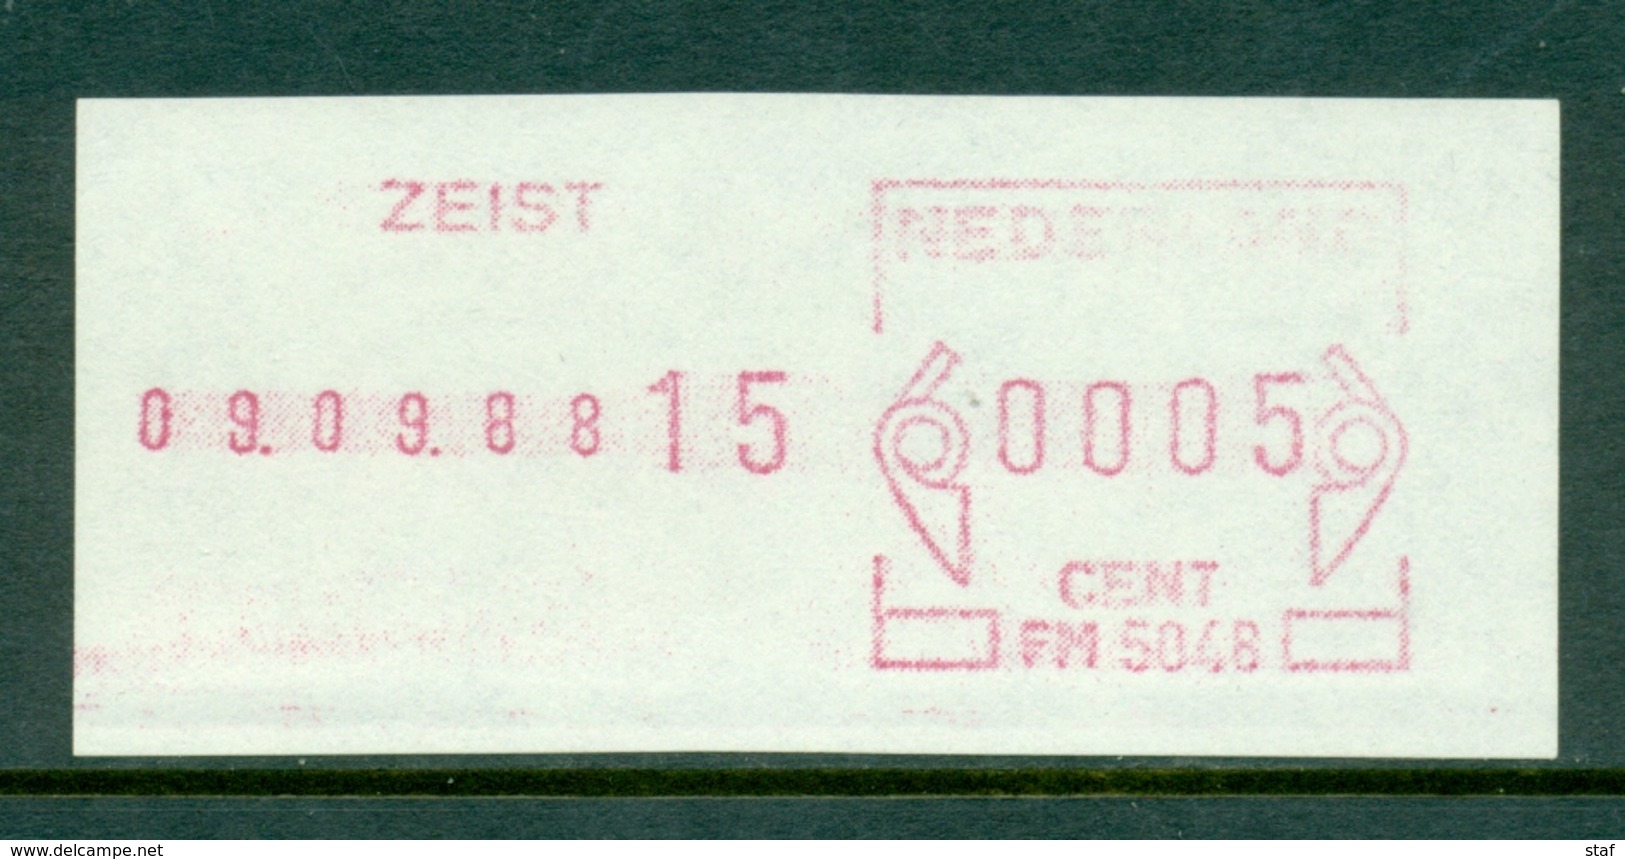 Loketstrook Zeist 1988 Postfris - Macchine Per Obliterare (EMA)